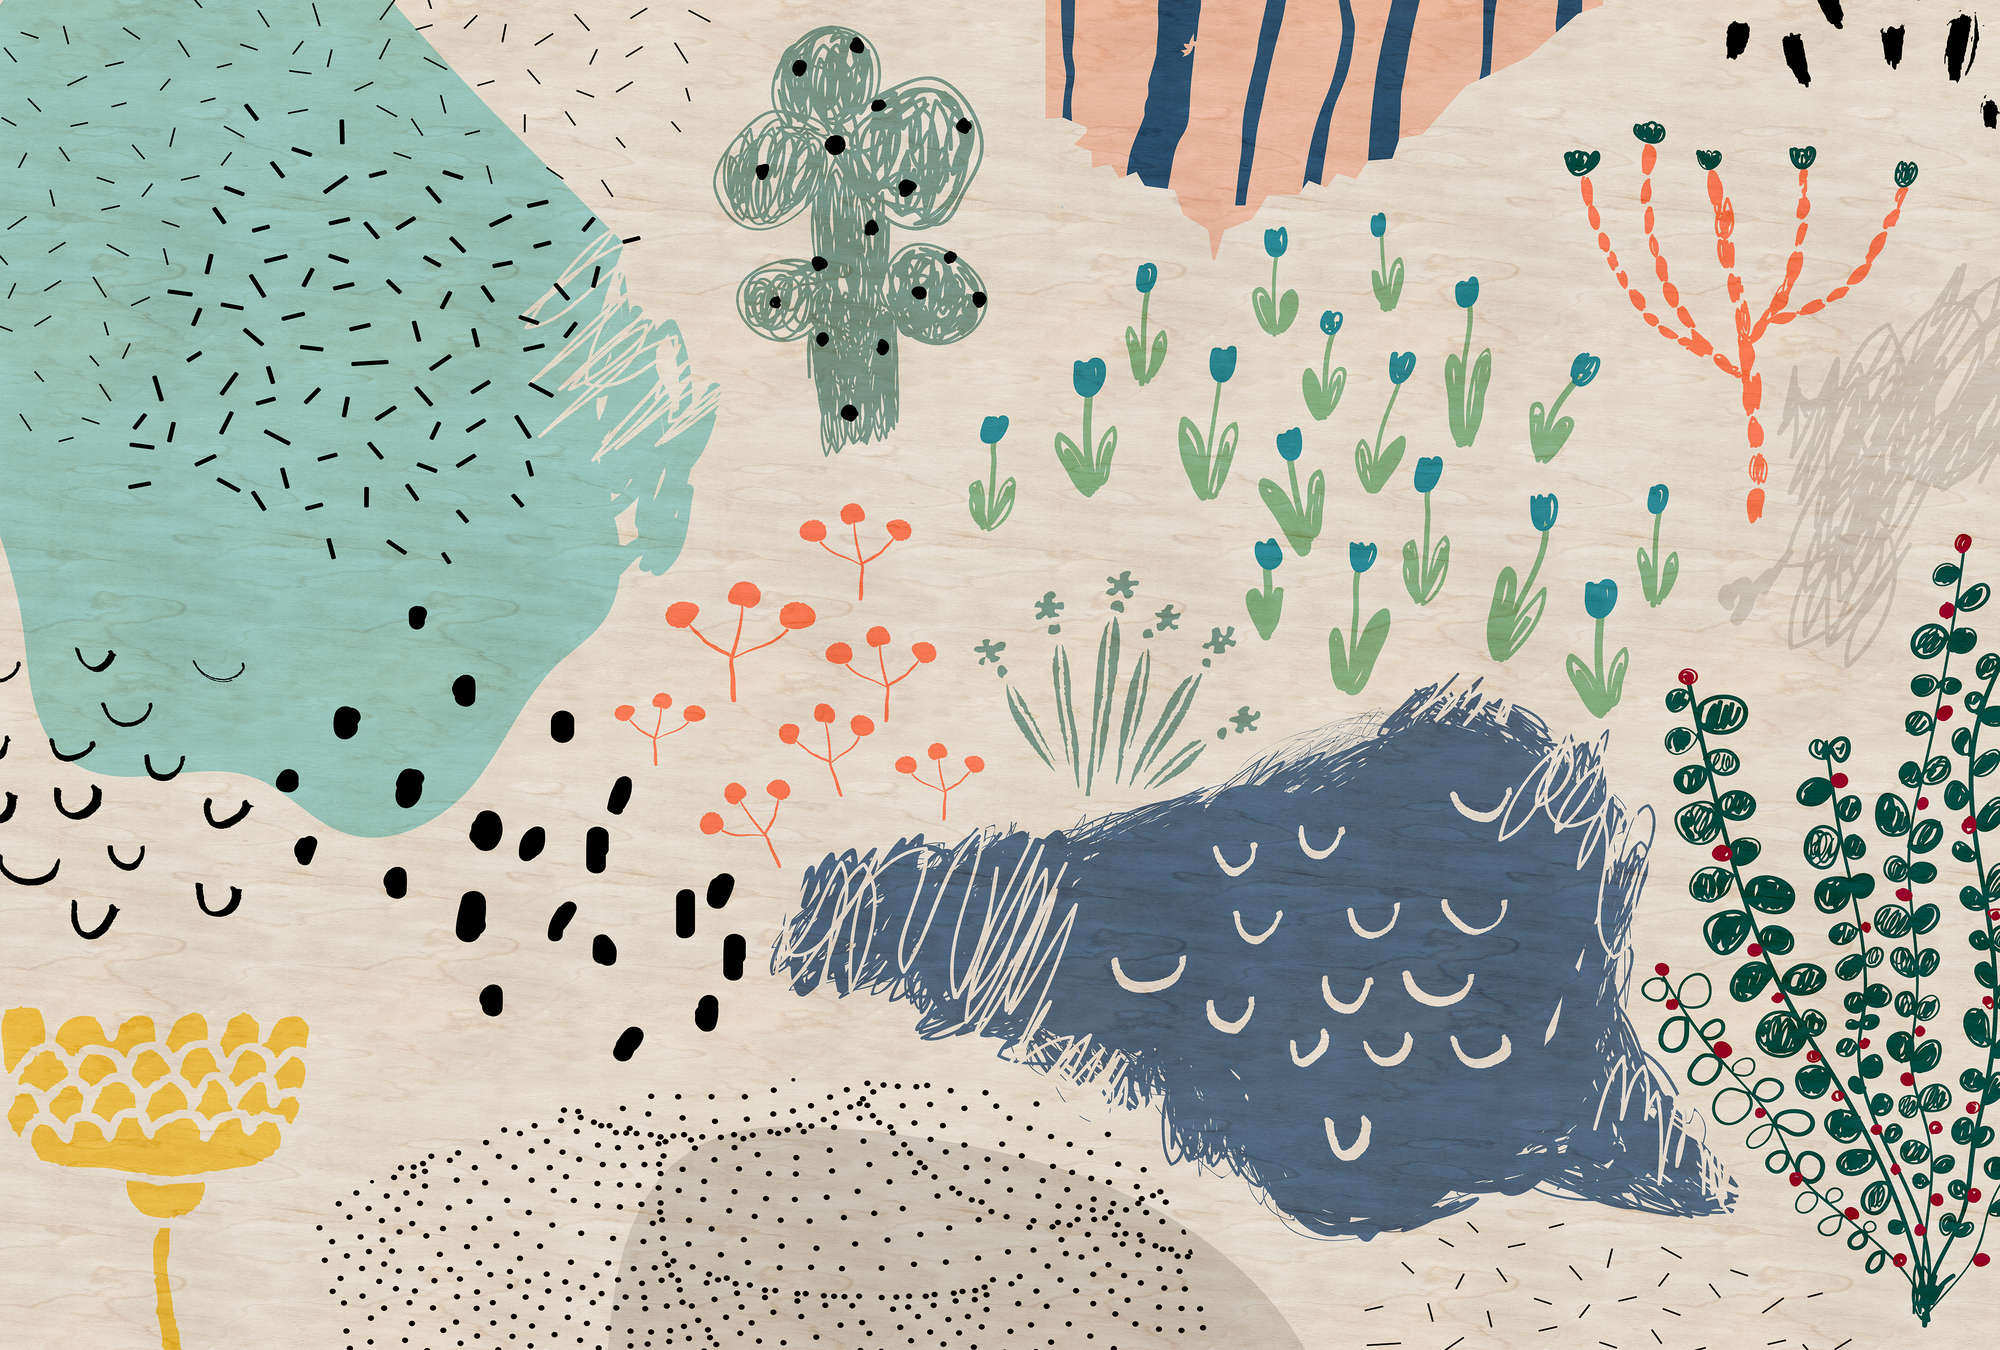             Crayon garden1 - Fototapete Kinderzimmer, Doodle Motiv in Sperrholz Struktur – Beige, Blau | Perlmutt Glattvlies
        